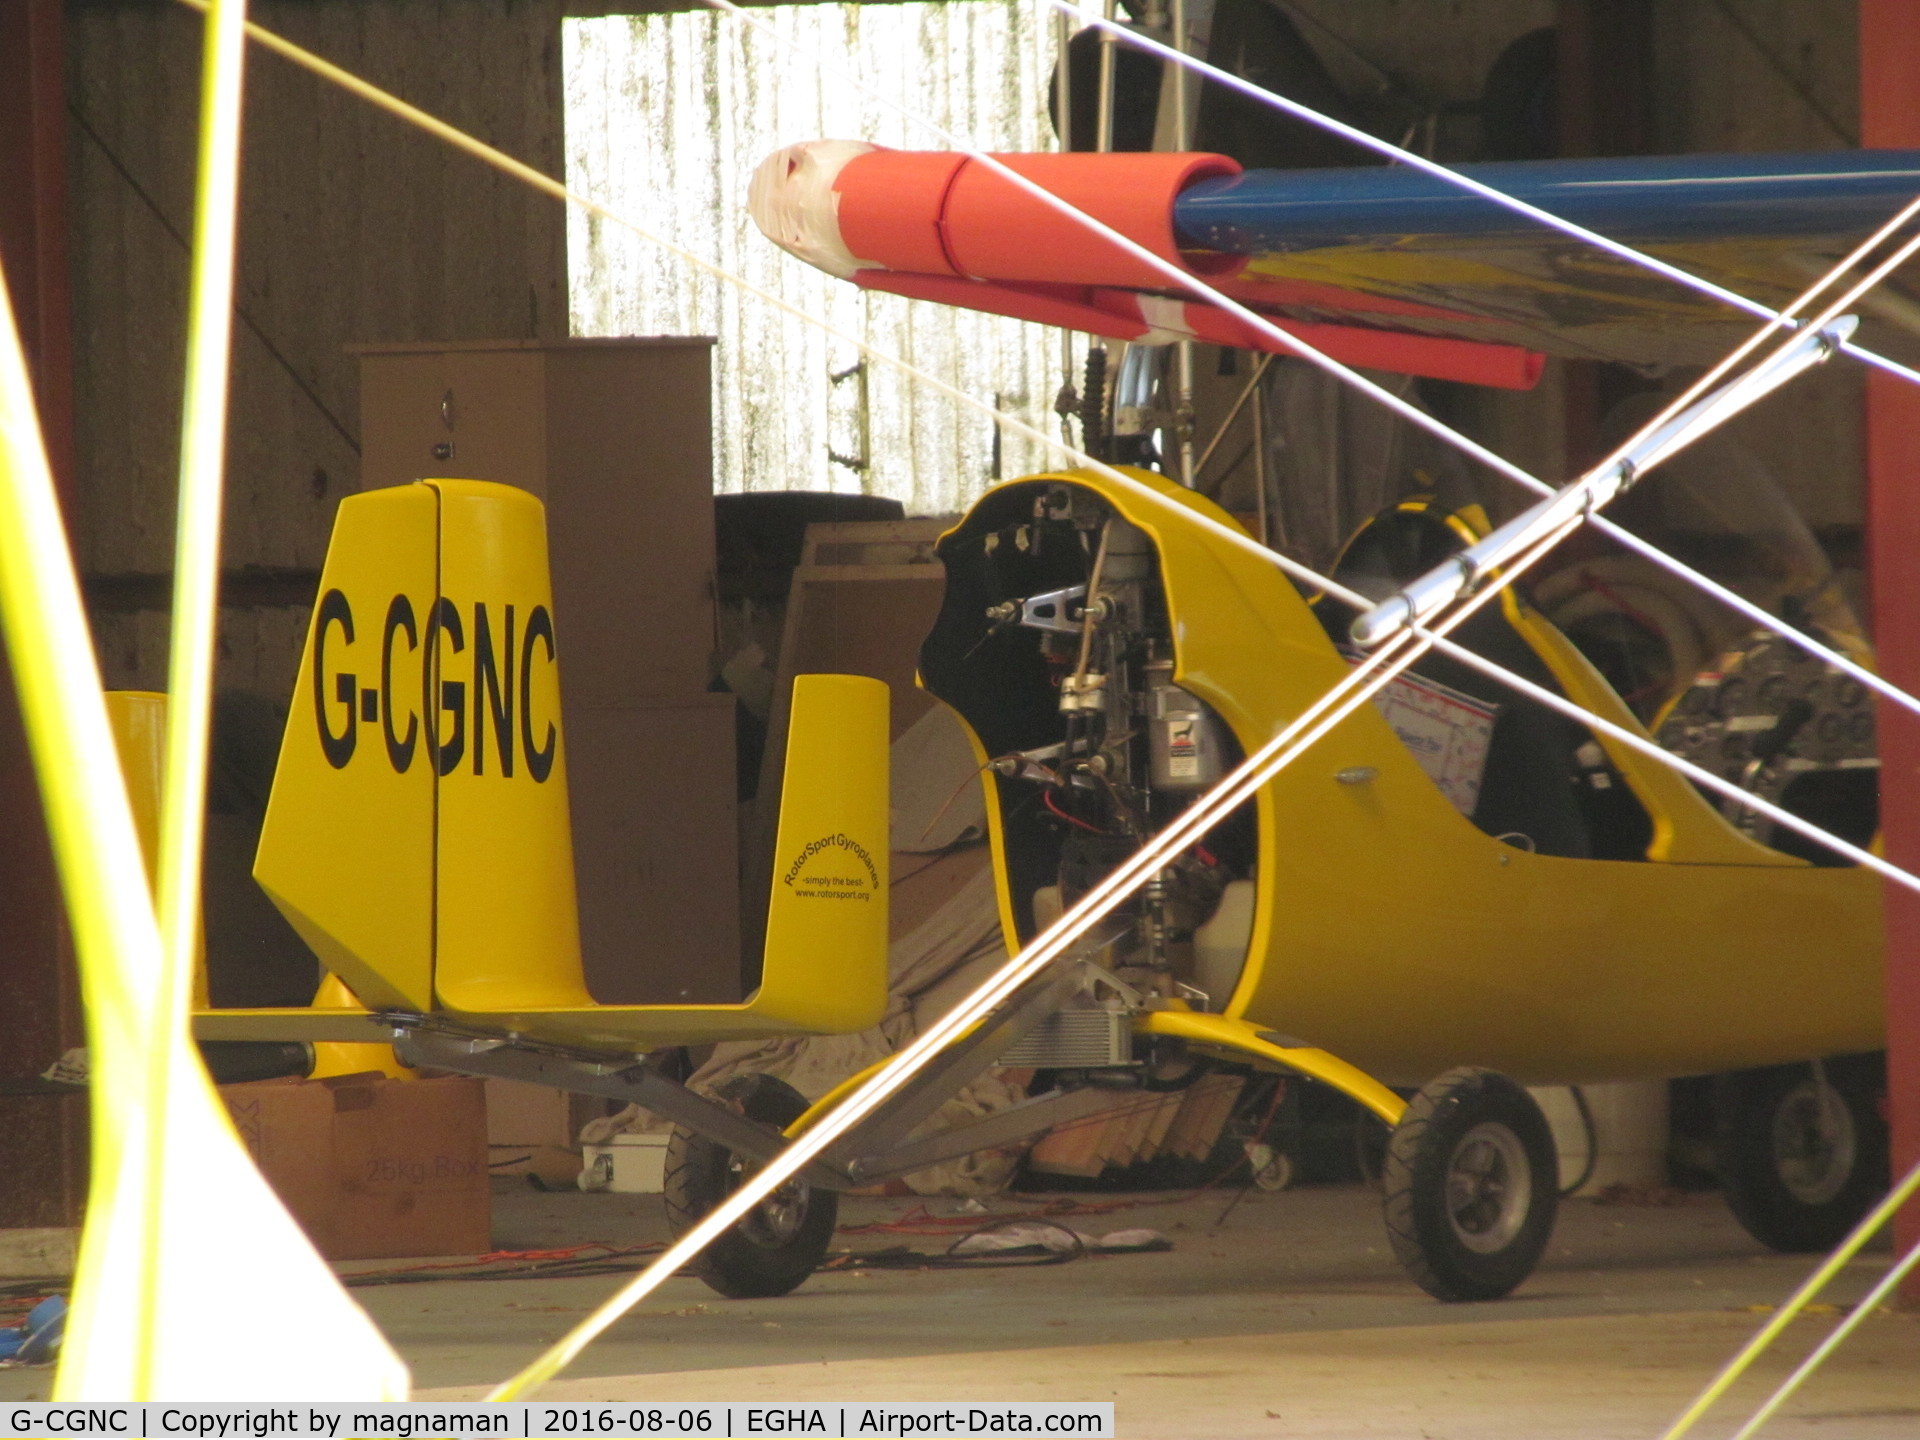 G-CGNC, 2010 Rotorsport UK MTOsport C/N RSUK/MTOS/035, snug in hangar